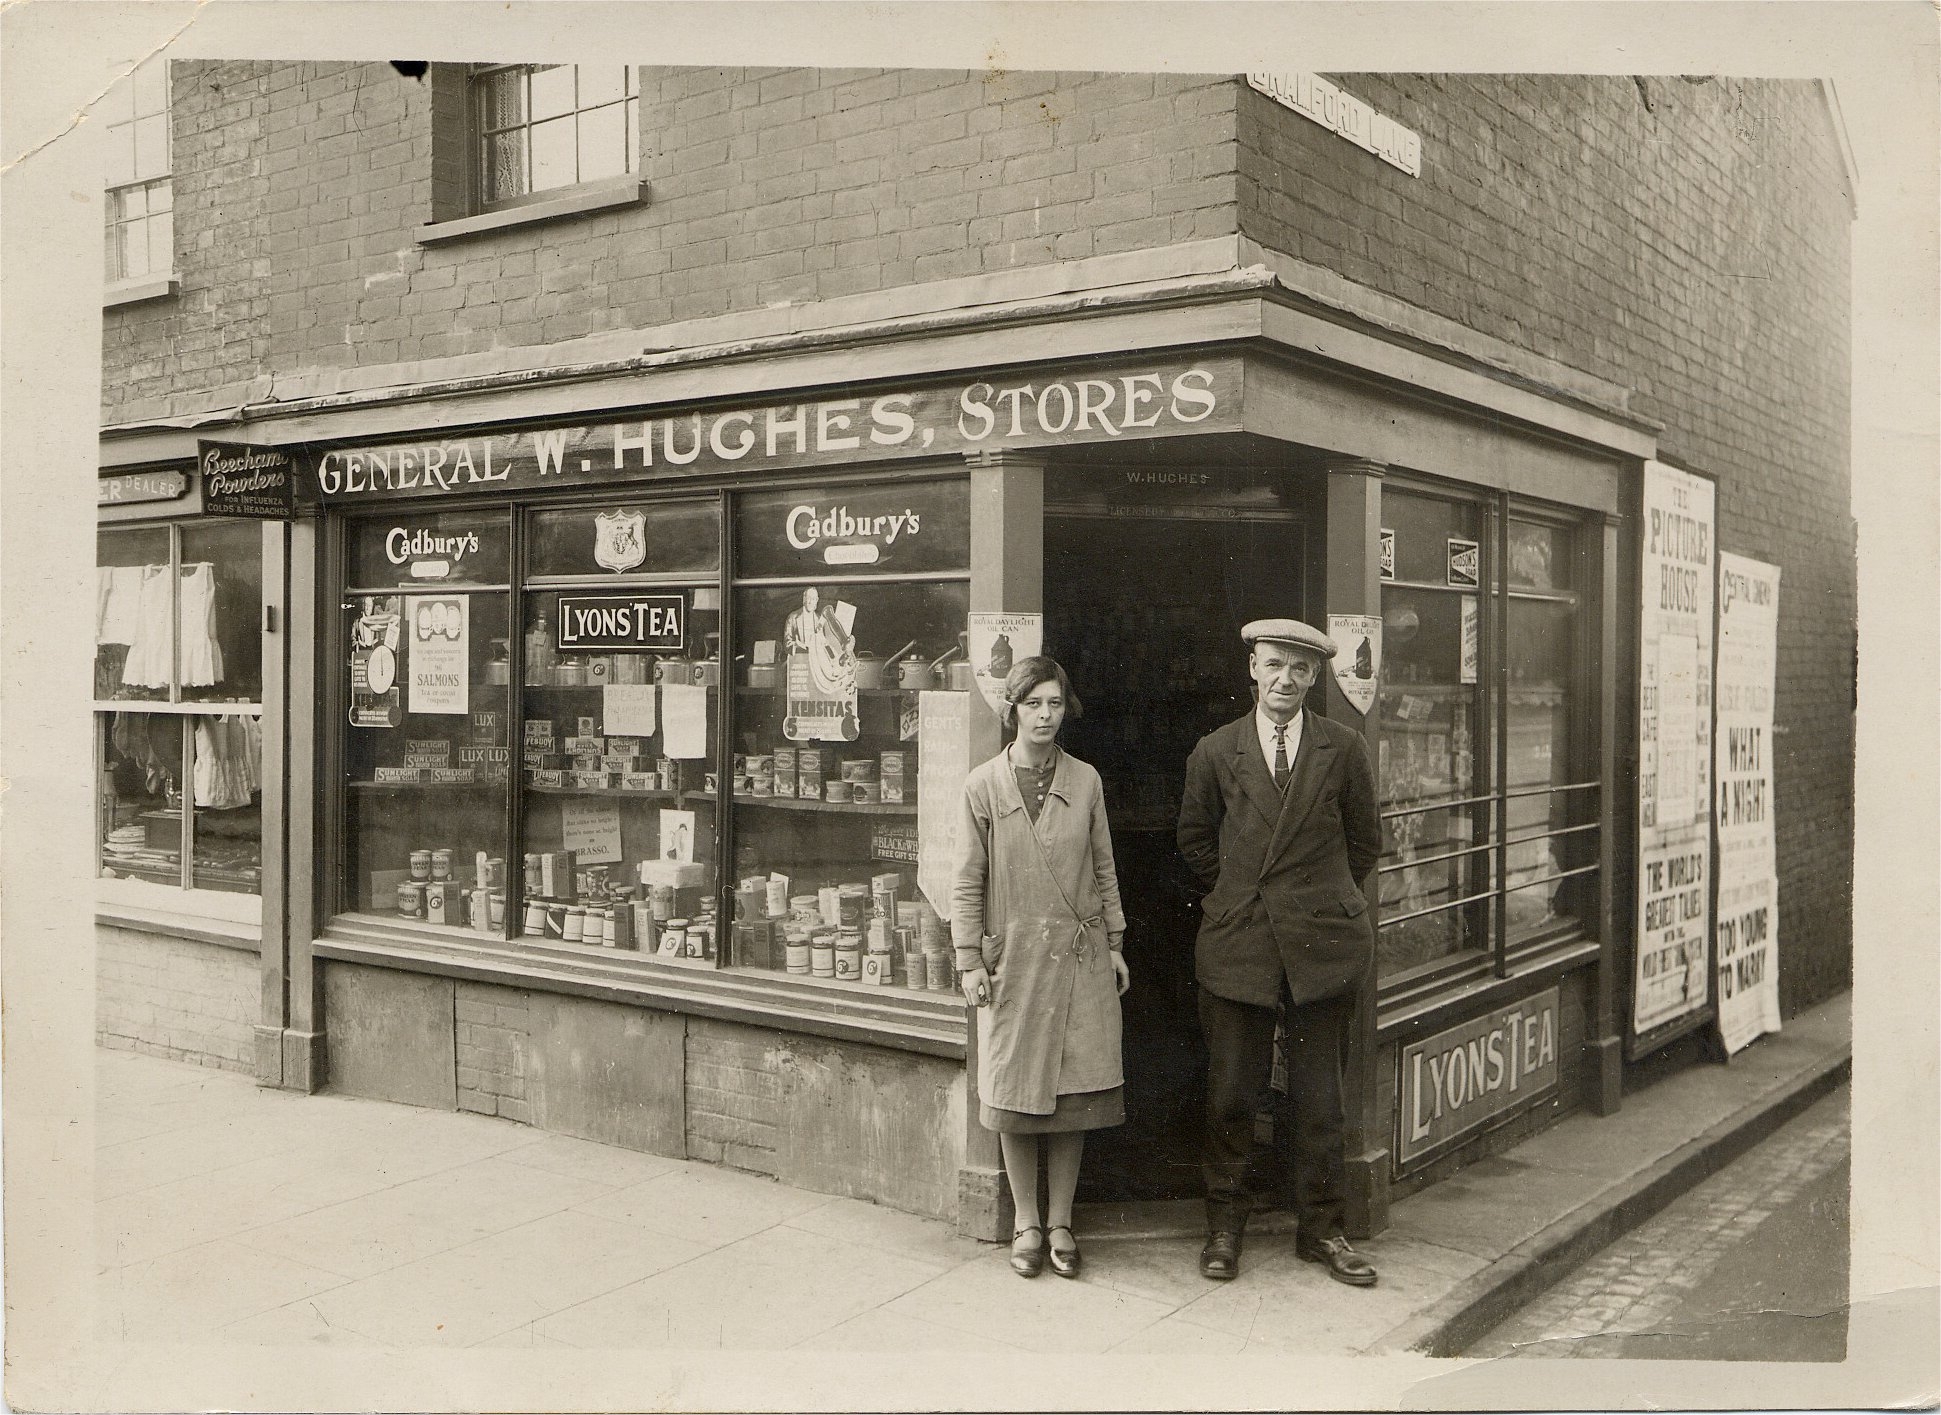 William Hughes' Grocery Store